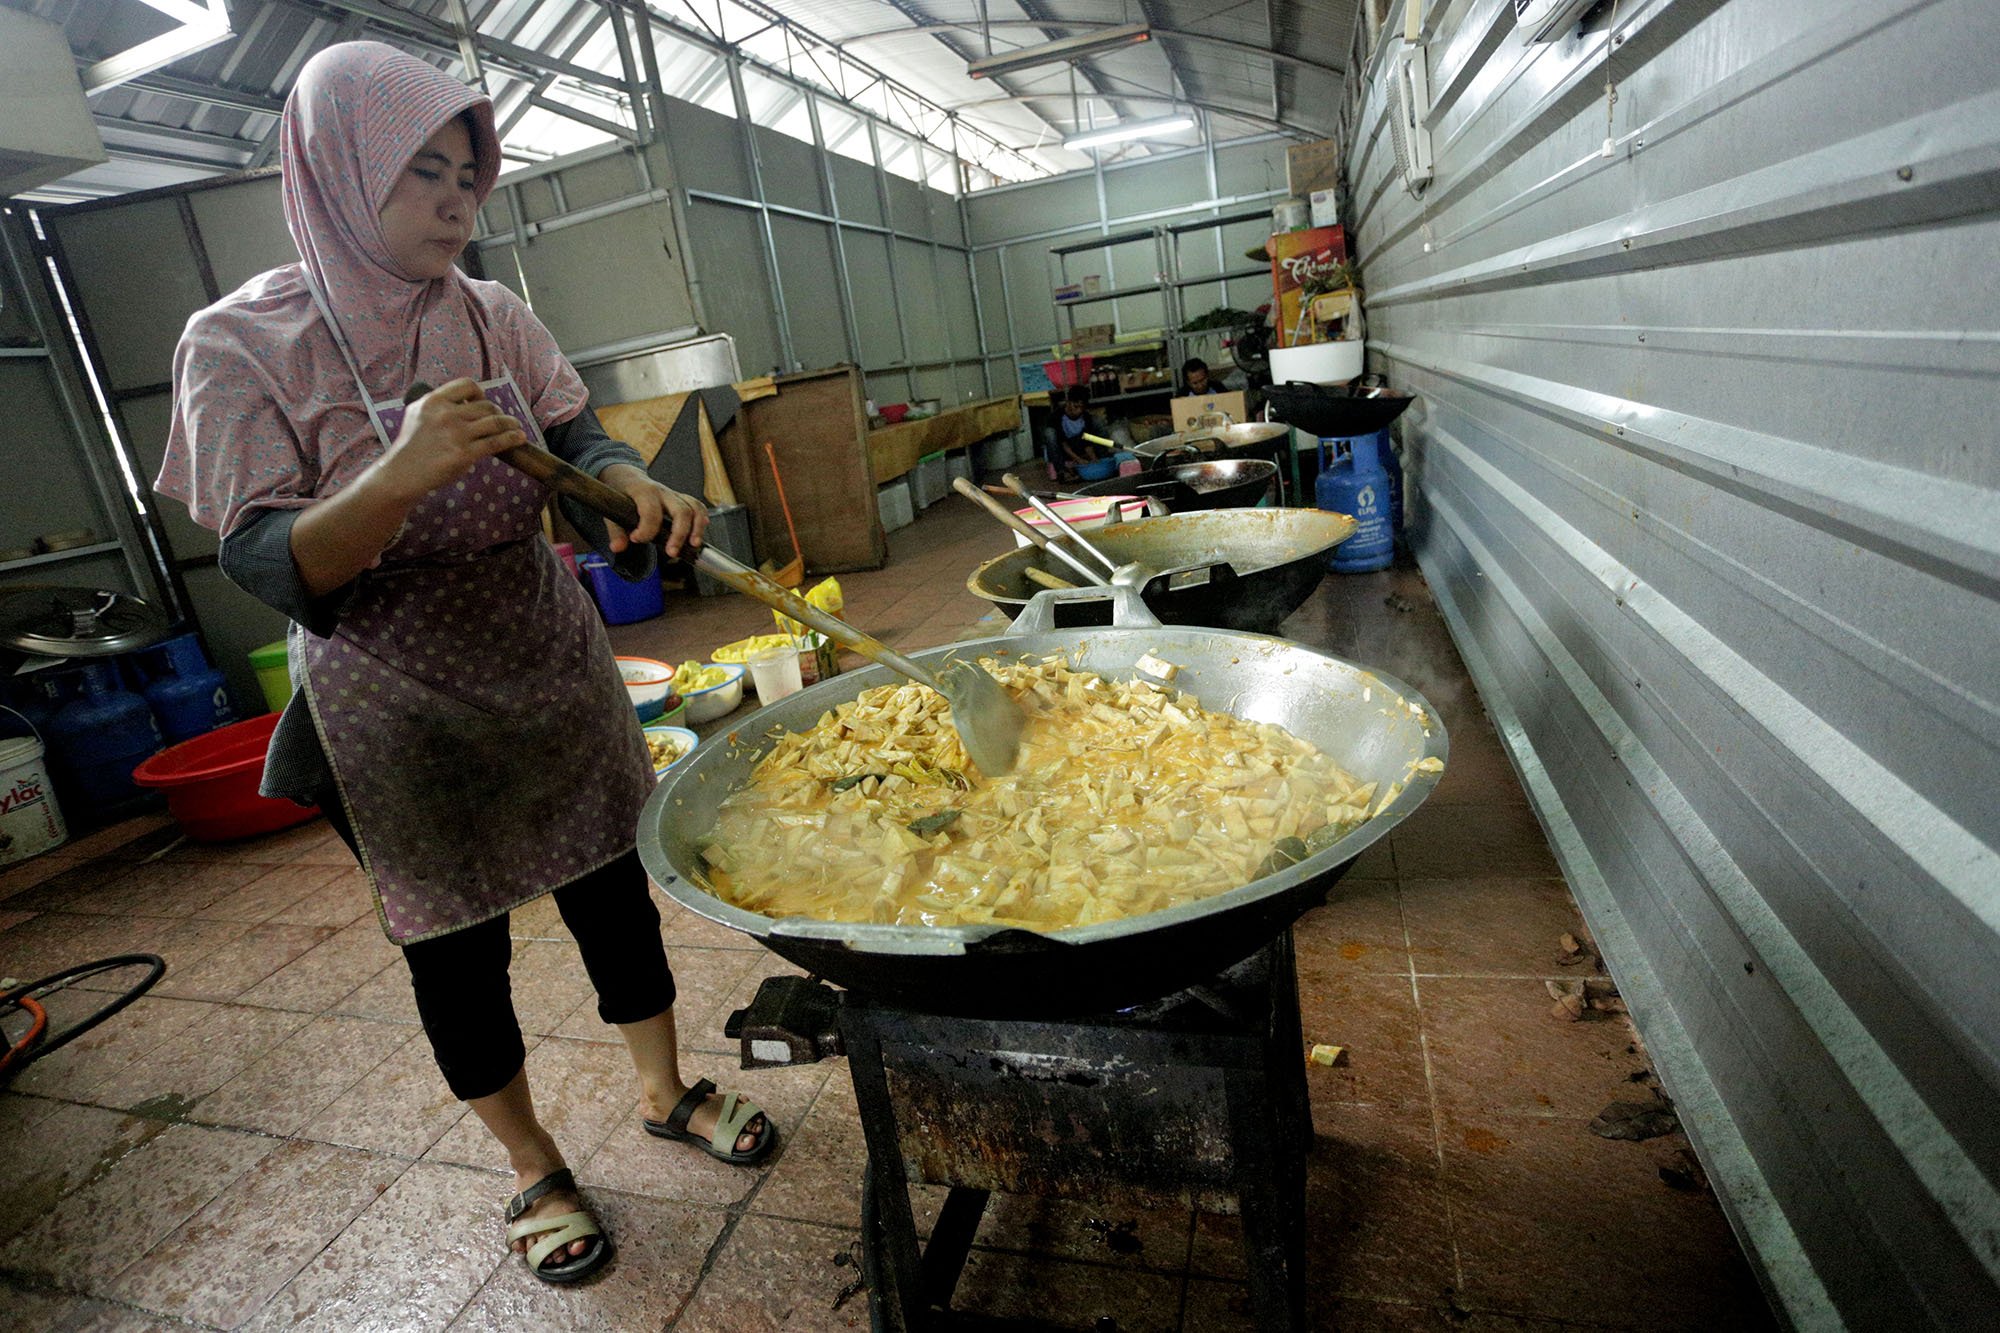 Seorang warga nampak sibuk menyiapkan makanan berbuka bagi jamaah yang akan berbuka puasa hari pertama di Masjid Istiqlal, Jakarta, Senin (7/5). Perharinya kurang lebih tiga ribuan nasi kotak disiapkan untuk jamaah yang buka puasa di Istiqlal.